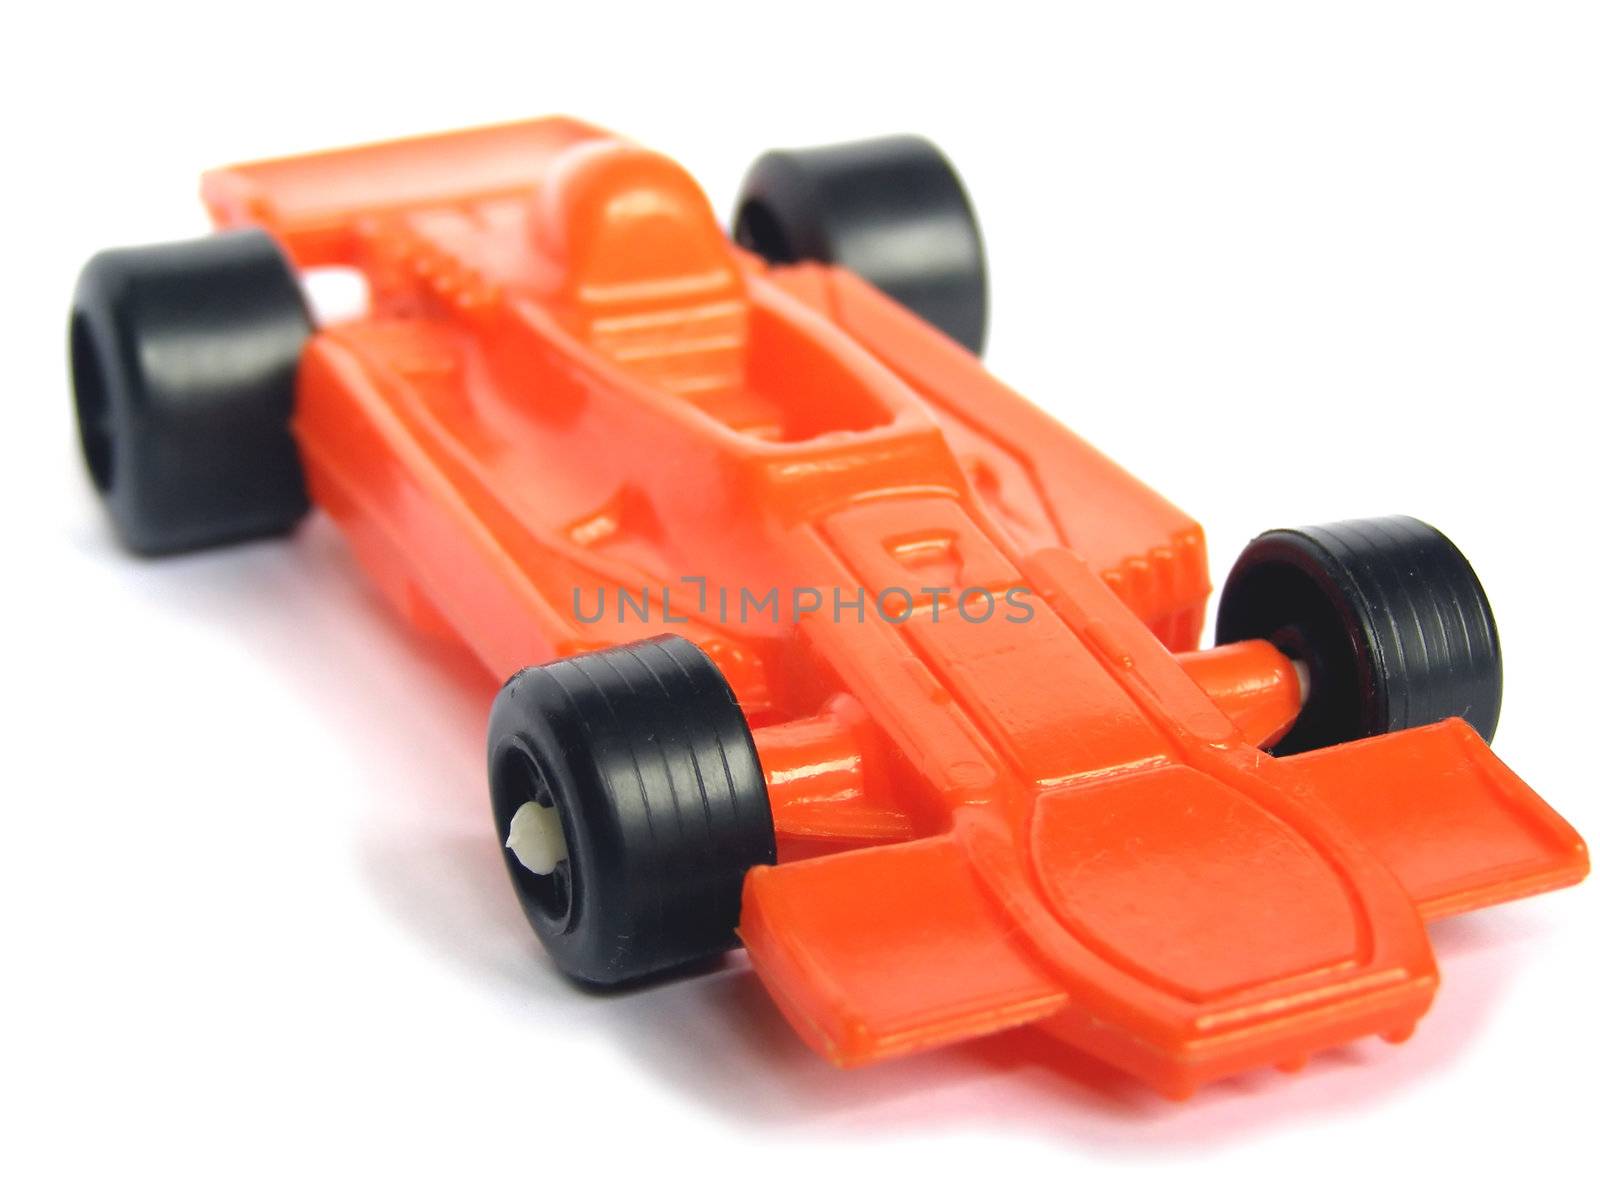 F1 Formula One racing car by claudiodivizia